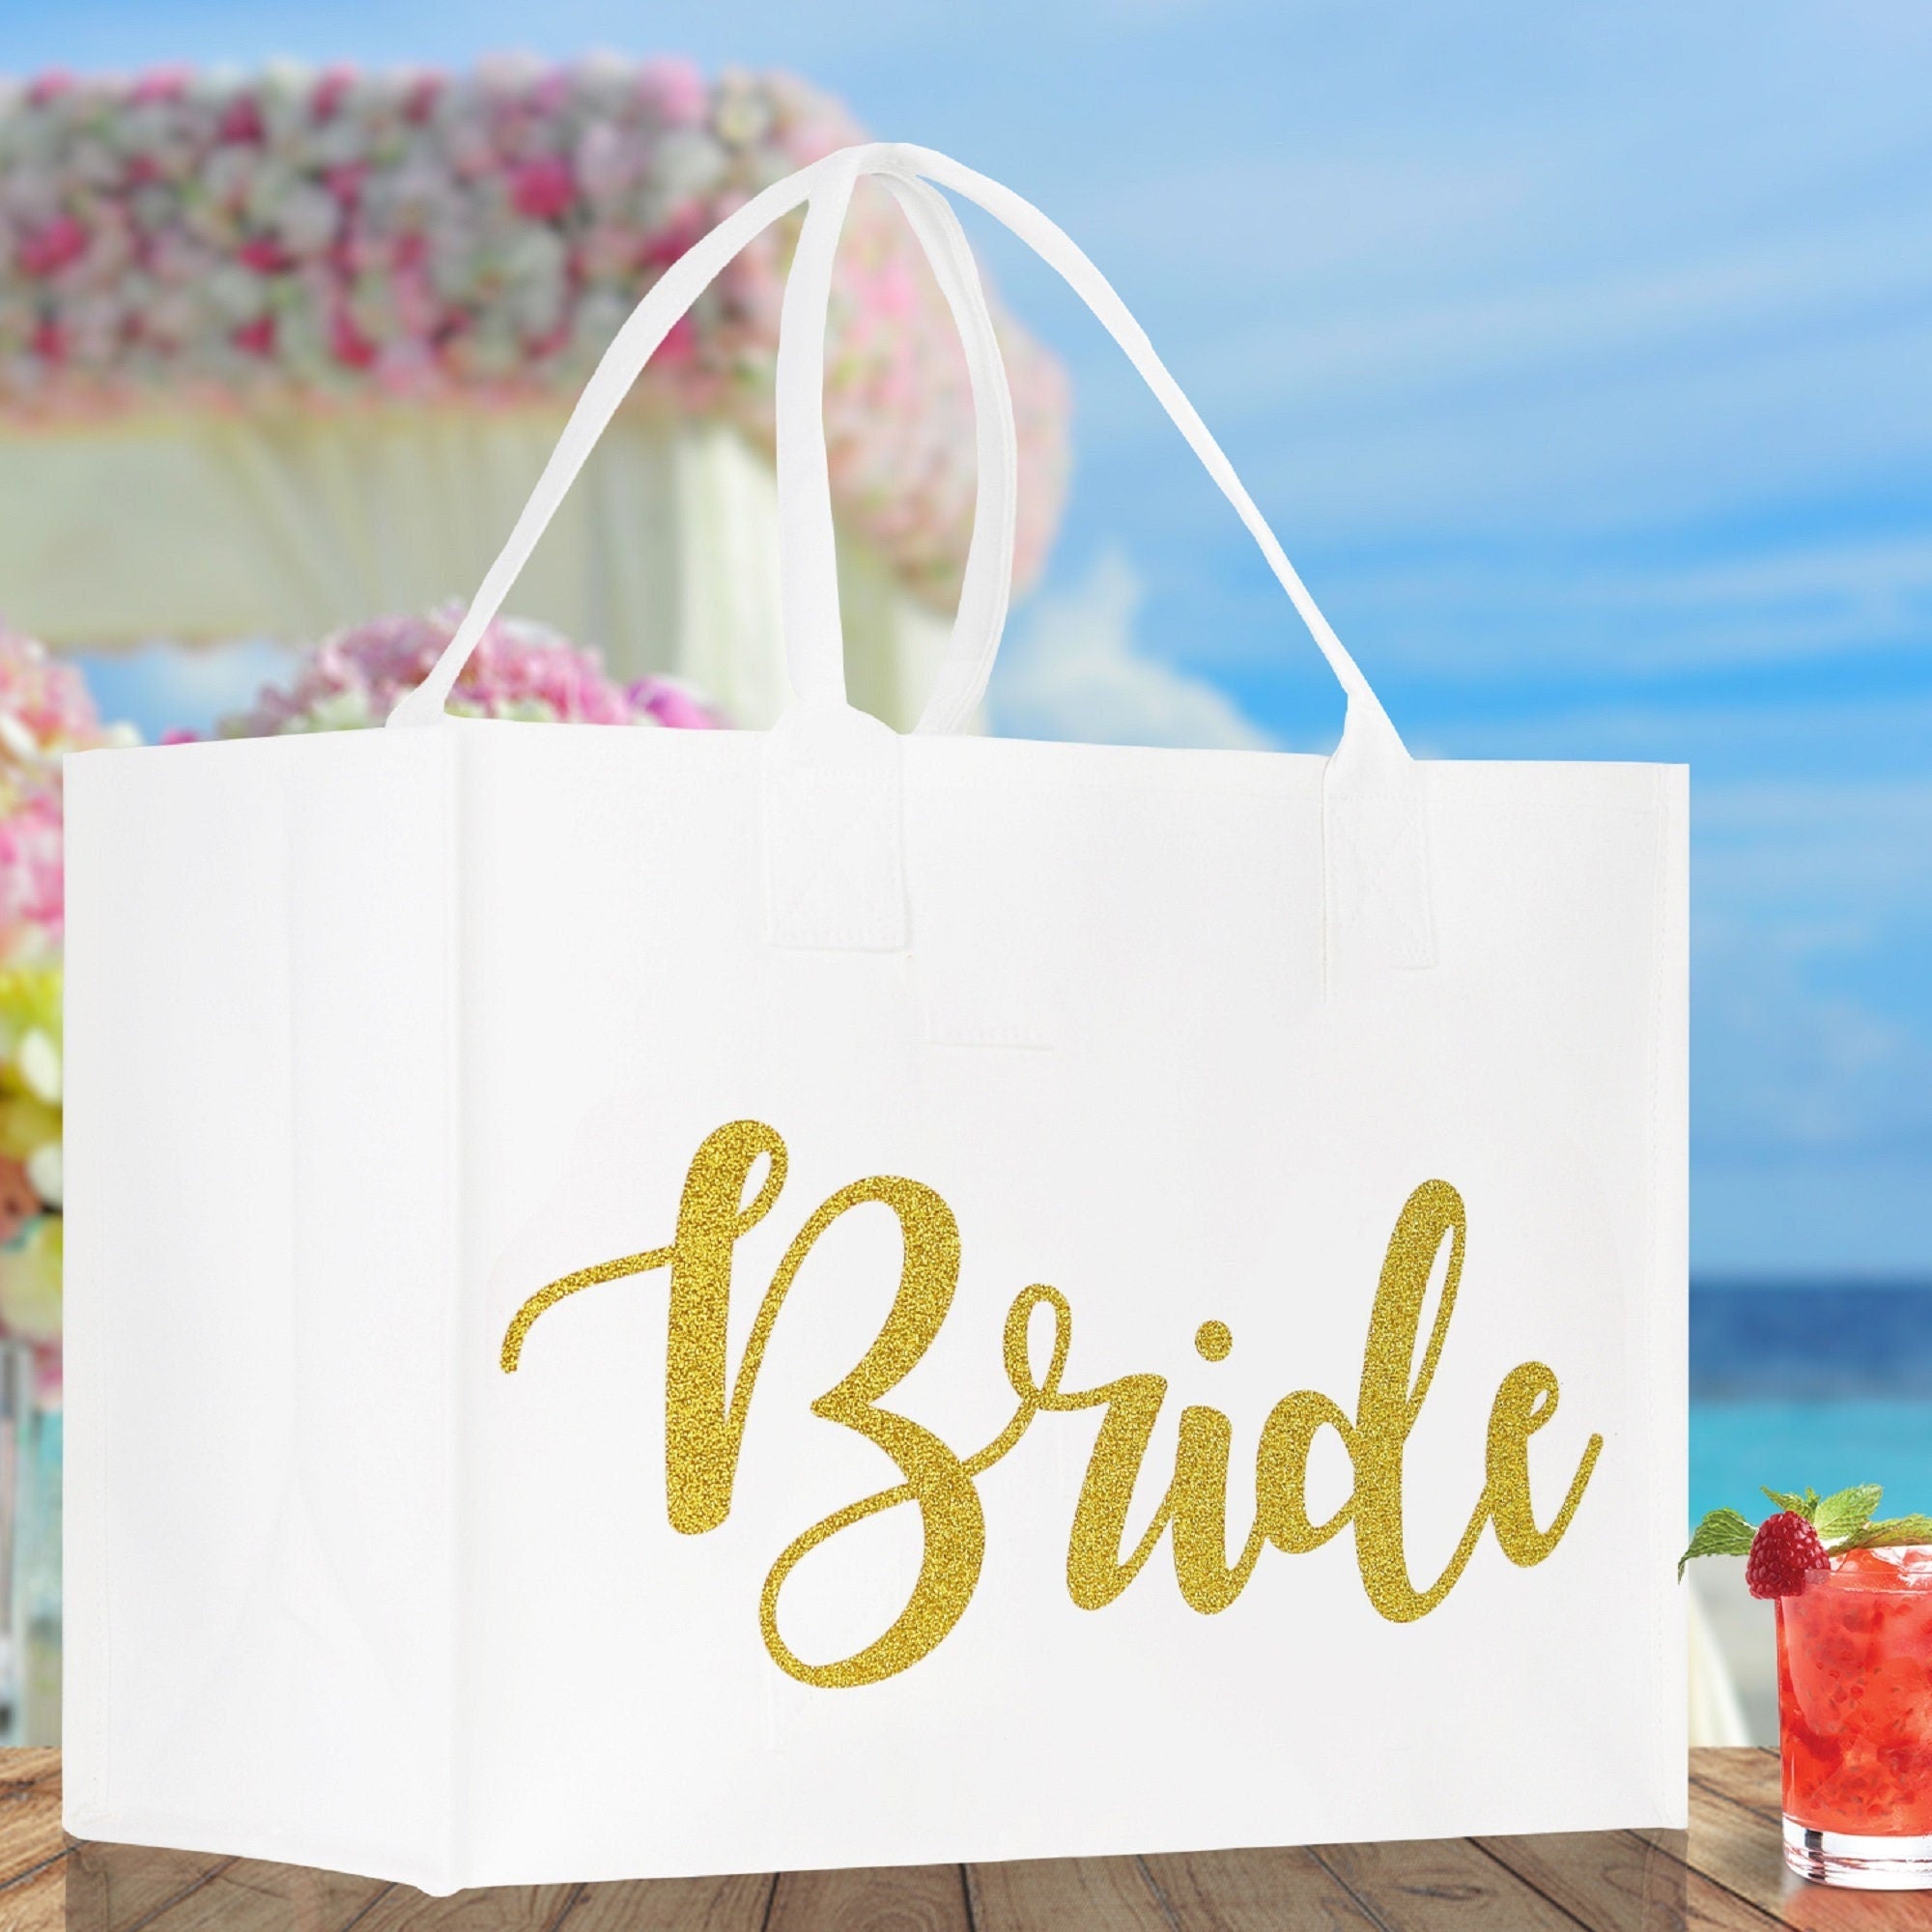 Bride Large Print Tote Bag 100% Cotton Canvas Bridal Party Tote Bachelorette Bag Bridal Chic Tote Bags Wedding Totes